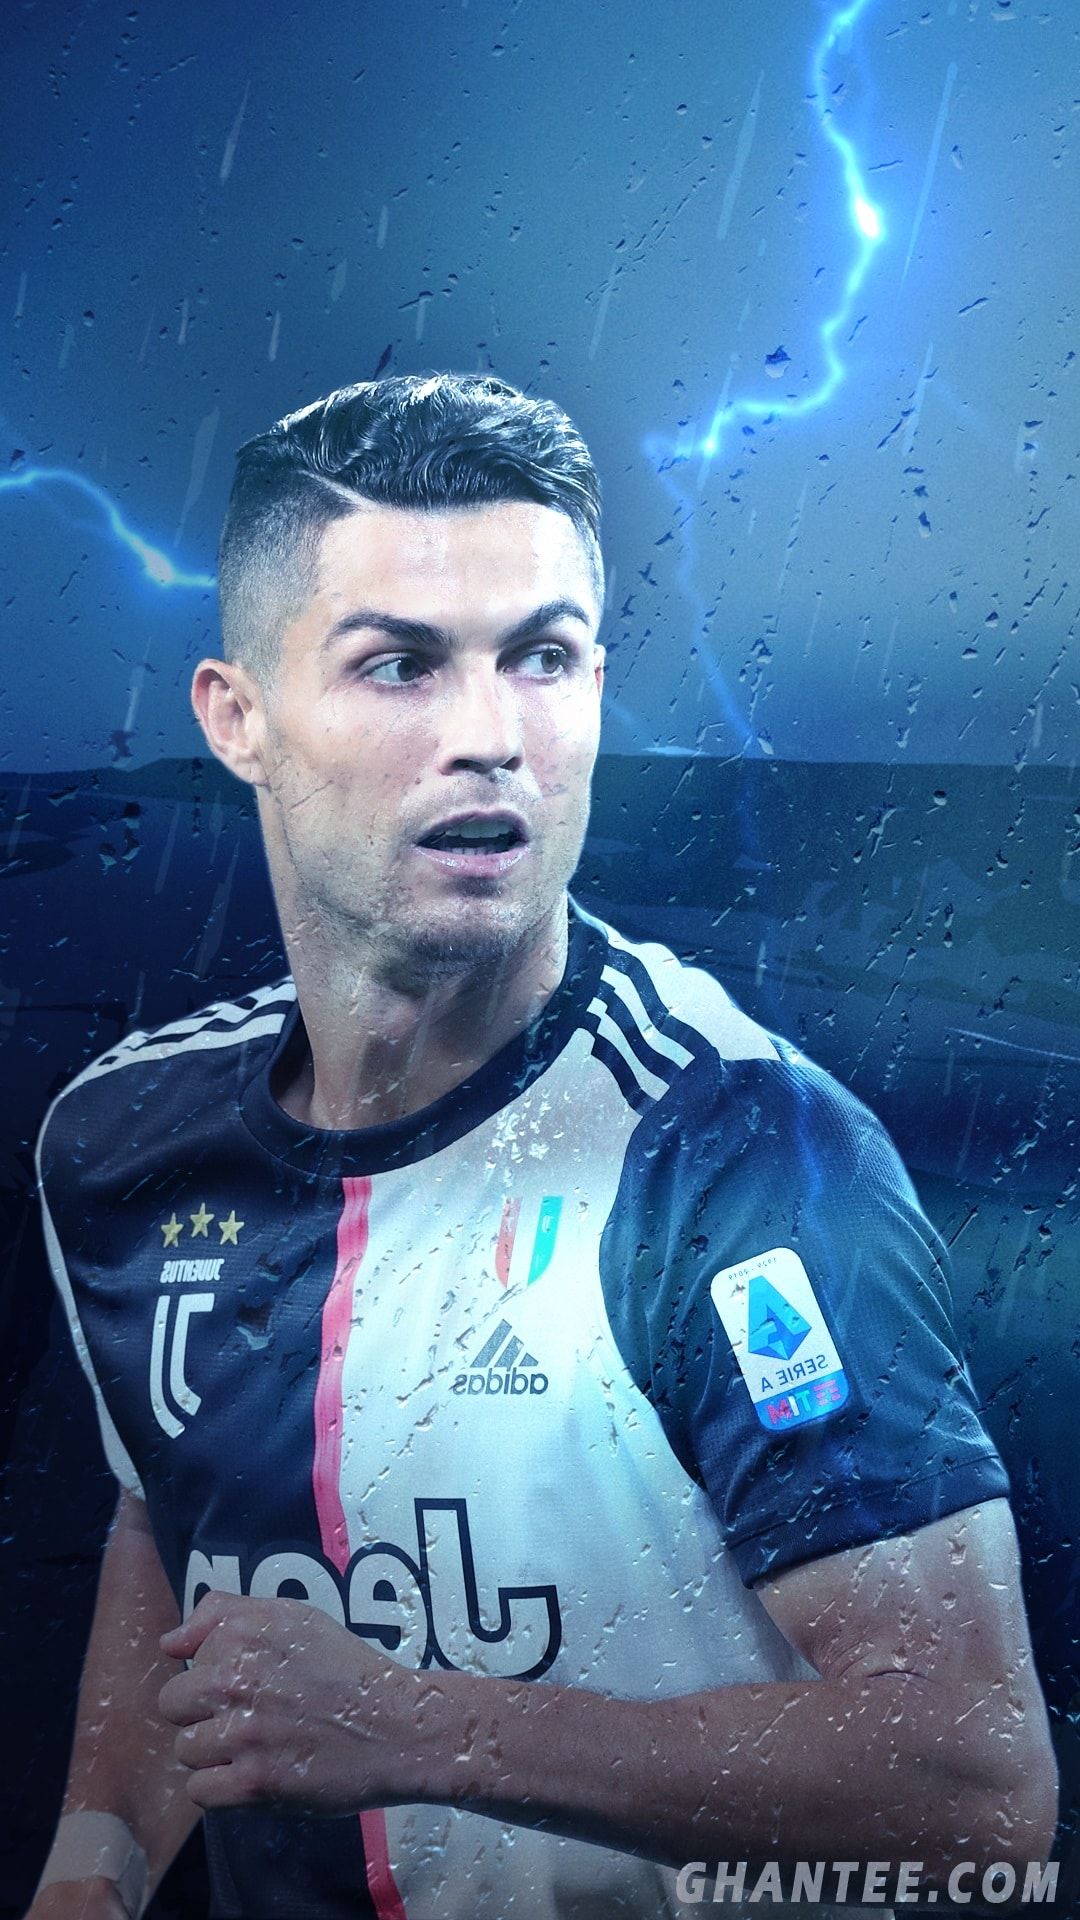 Goat Cristiano Ronaldo 2021 Wallpapers